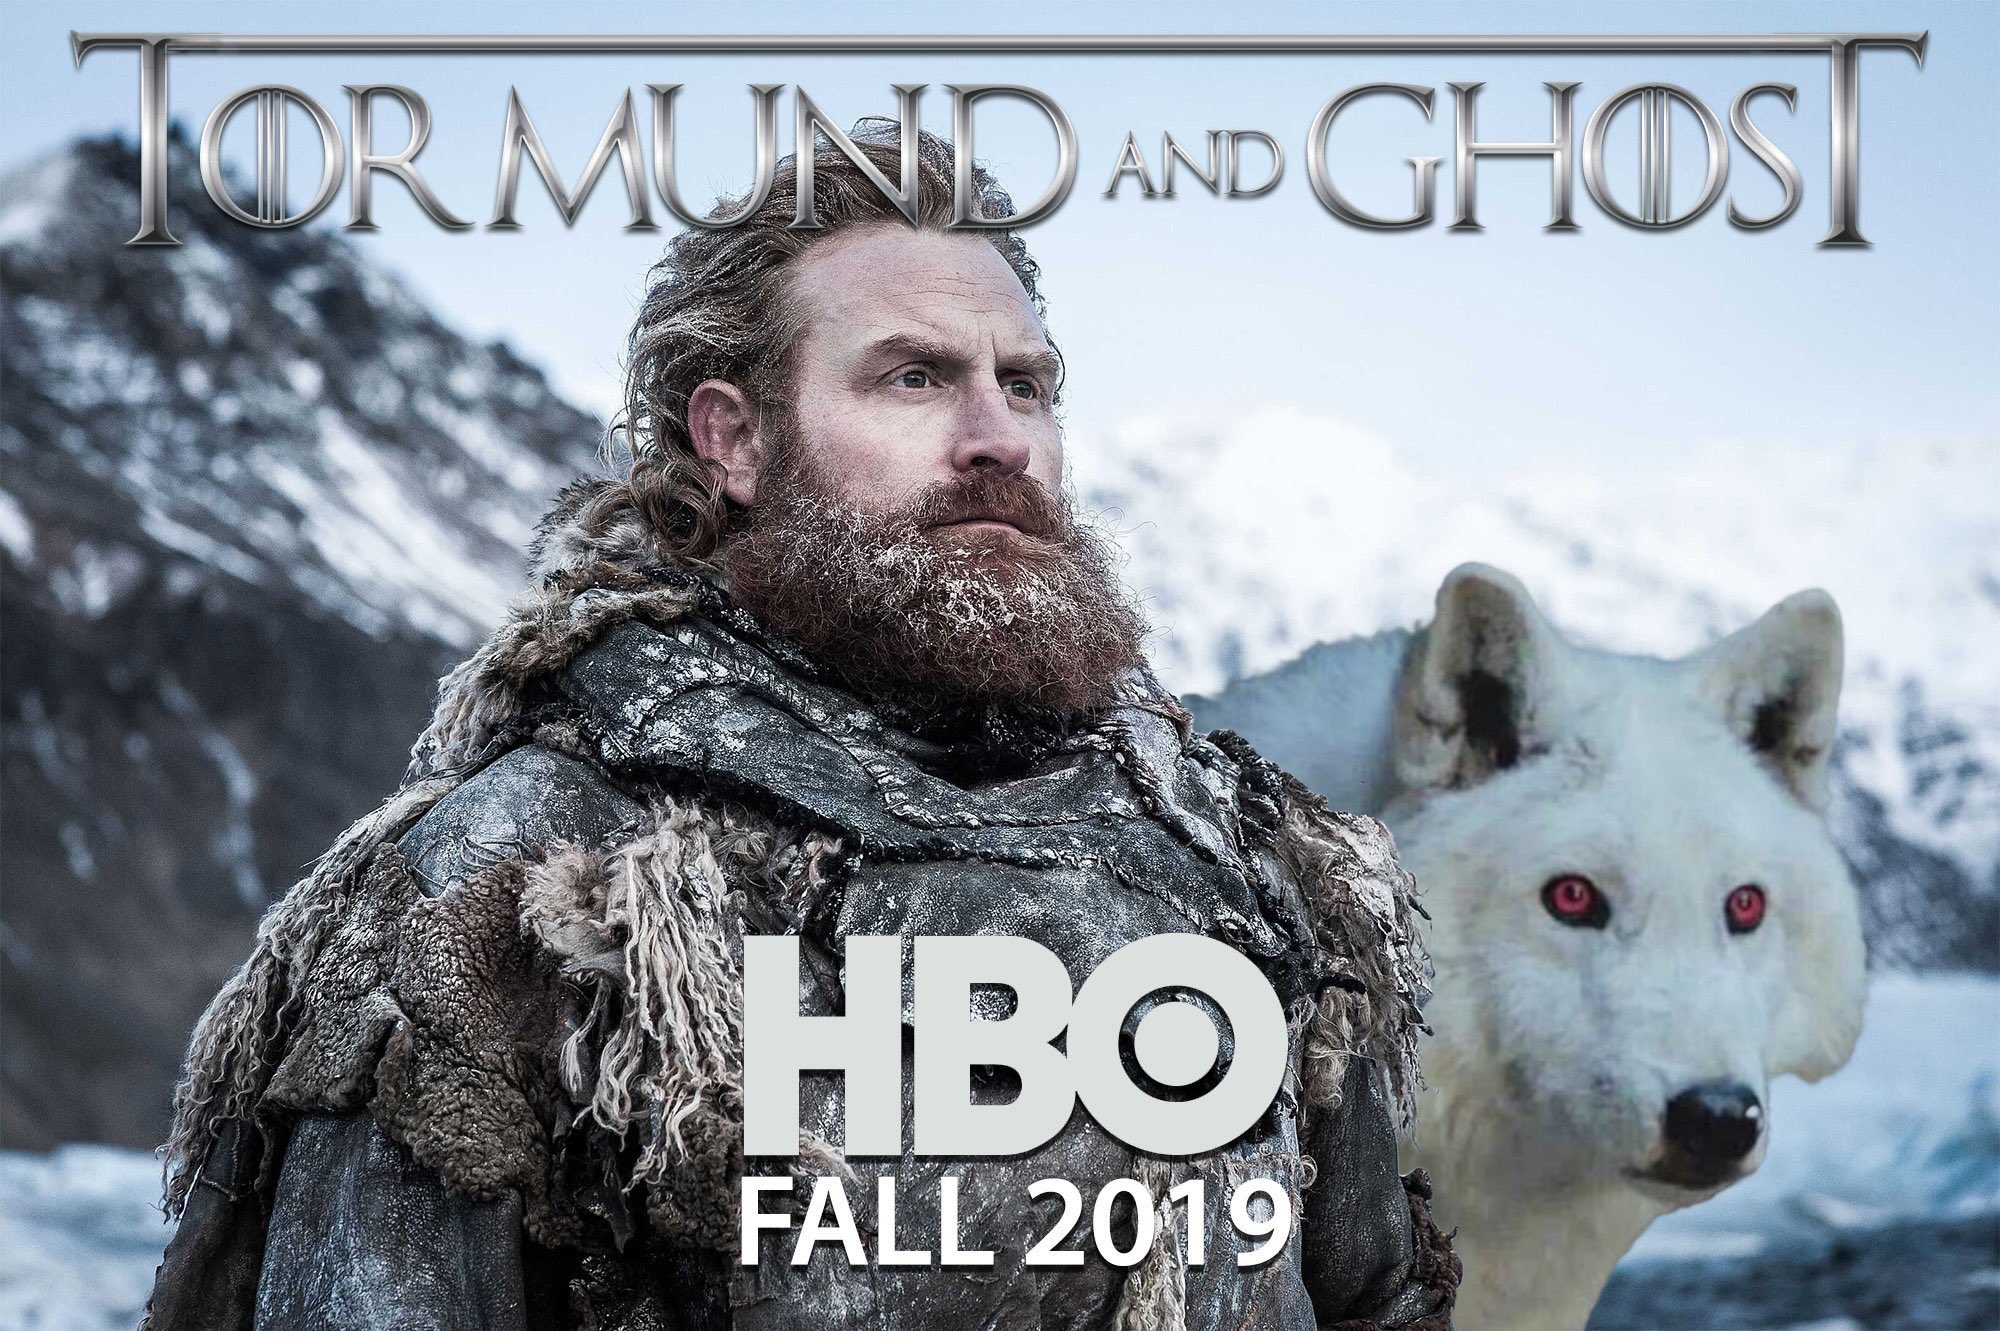 Ghost meme game of thrones - game of thrones season 8 - Tormund And Ghost Fall 2019